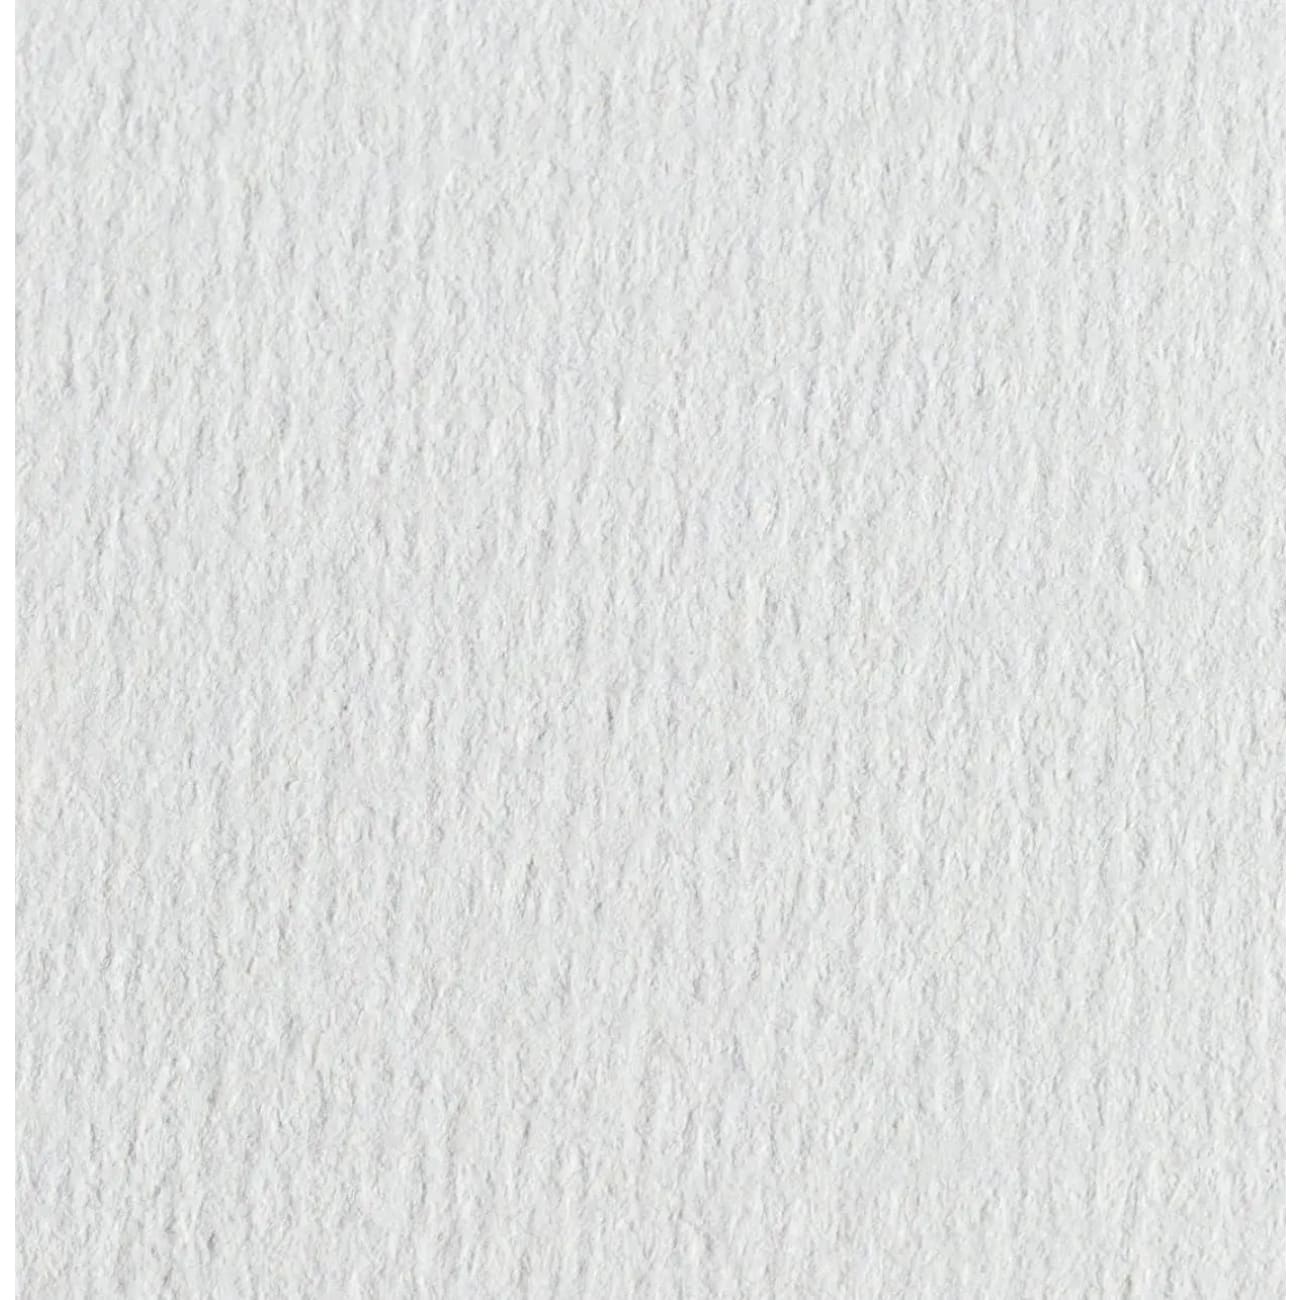 WATERCOLOUR PAPER (Premium 100% Cotton, 300GSM, Cold Pressed Paper Pad) Rock Chocs 